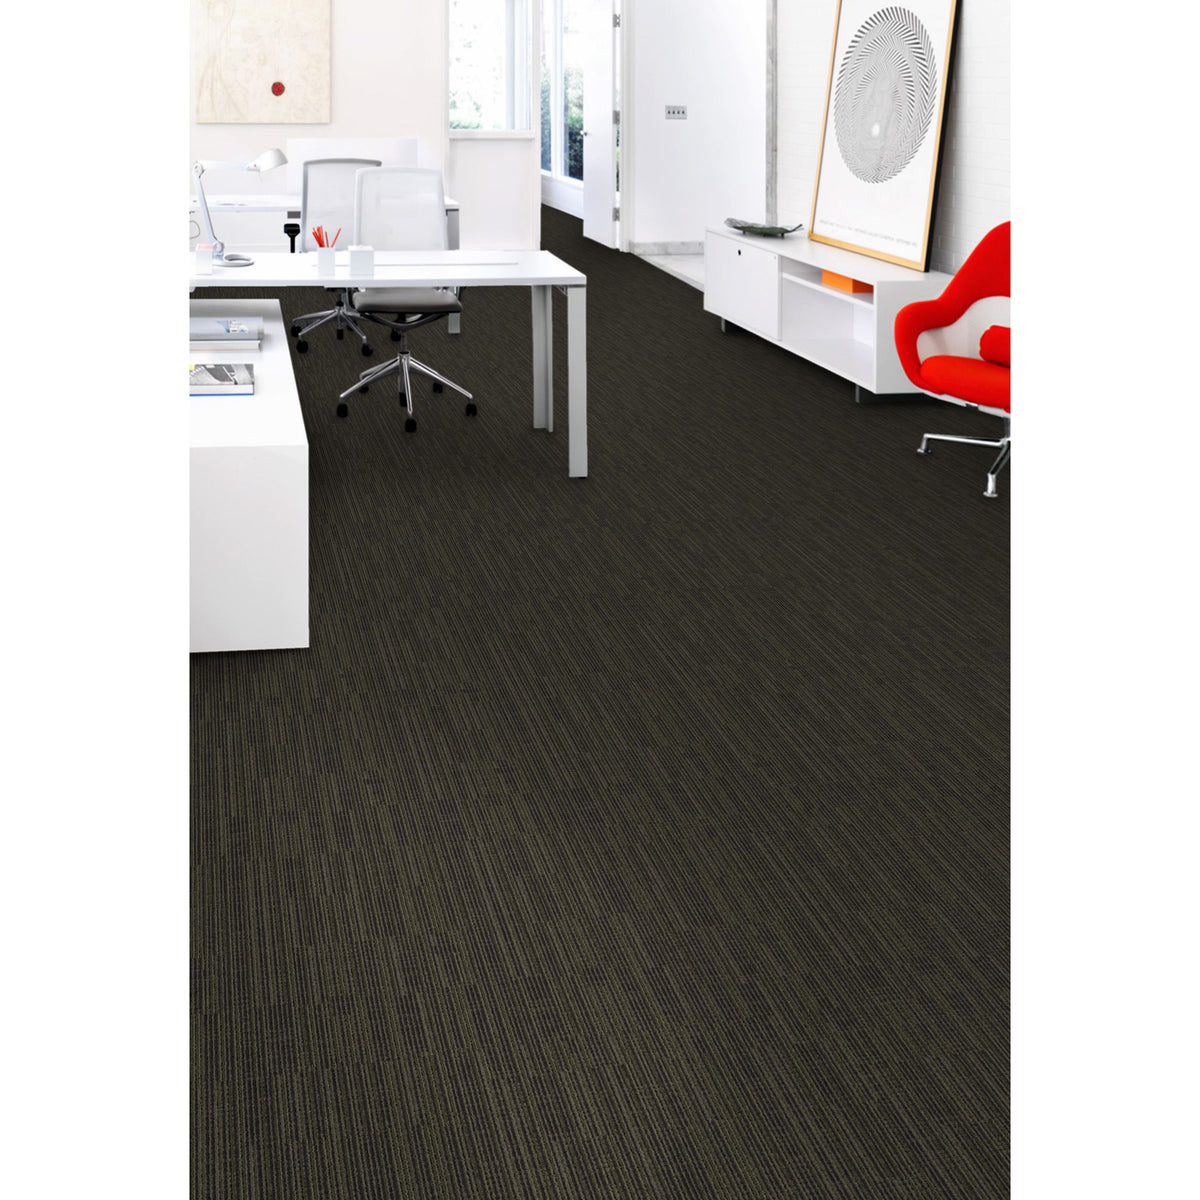 Aladdin Commercial - Get Moving - Carpet Tile - Graphite - Room Scene